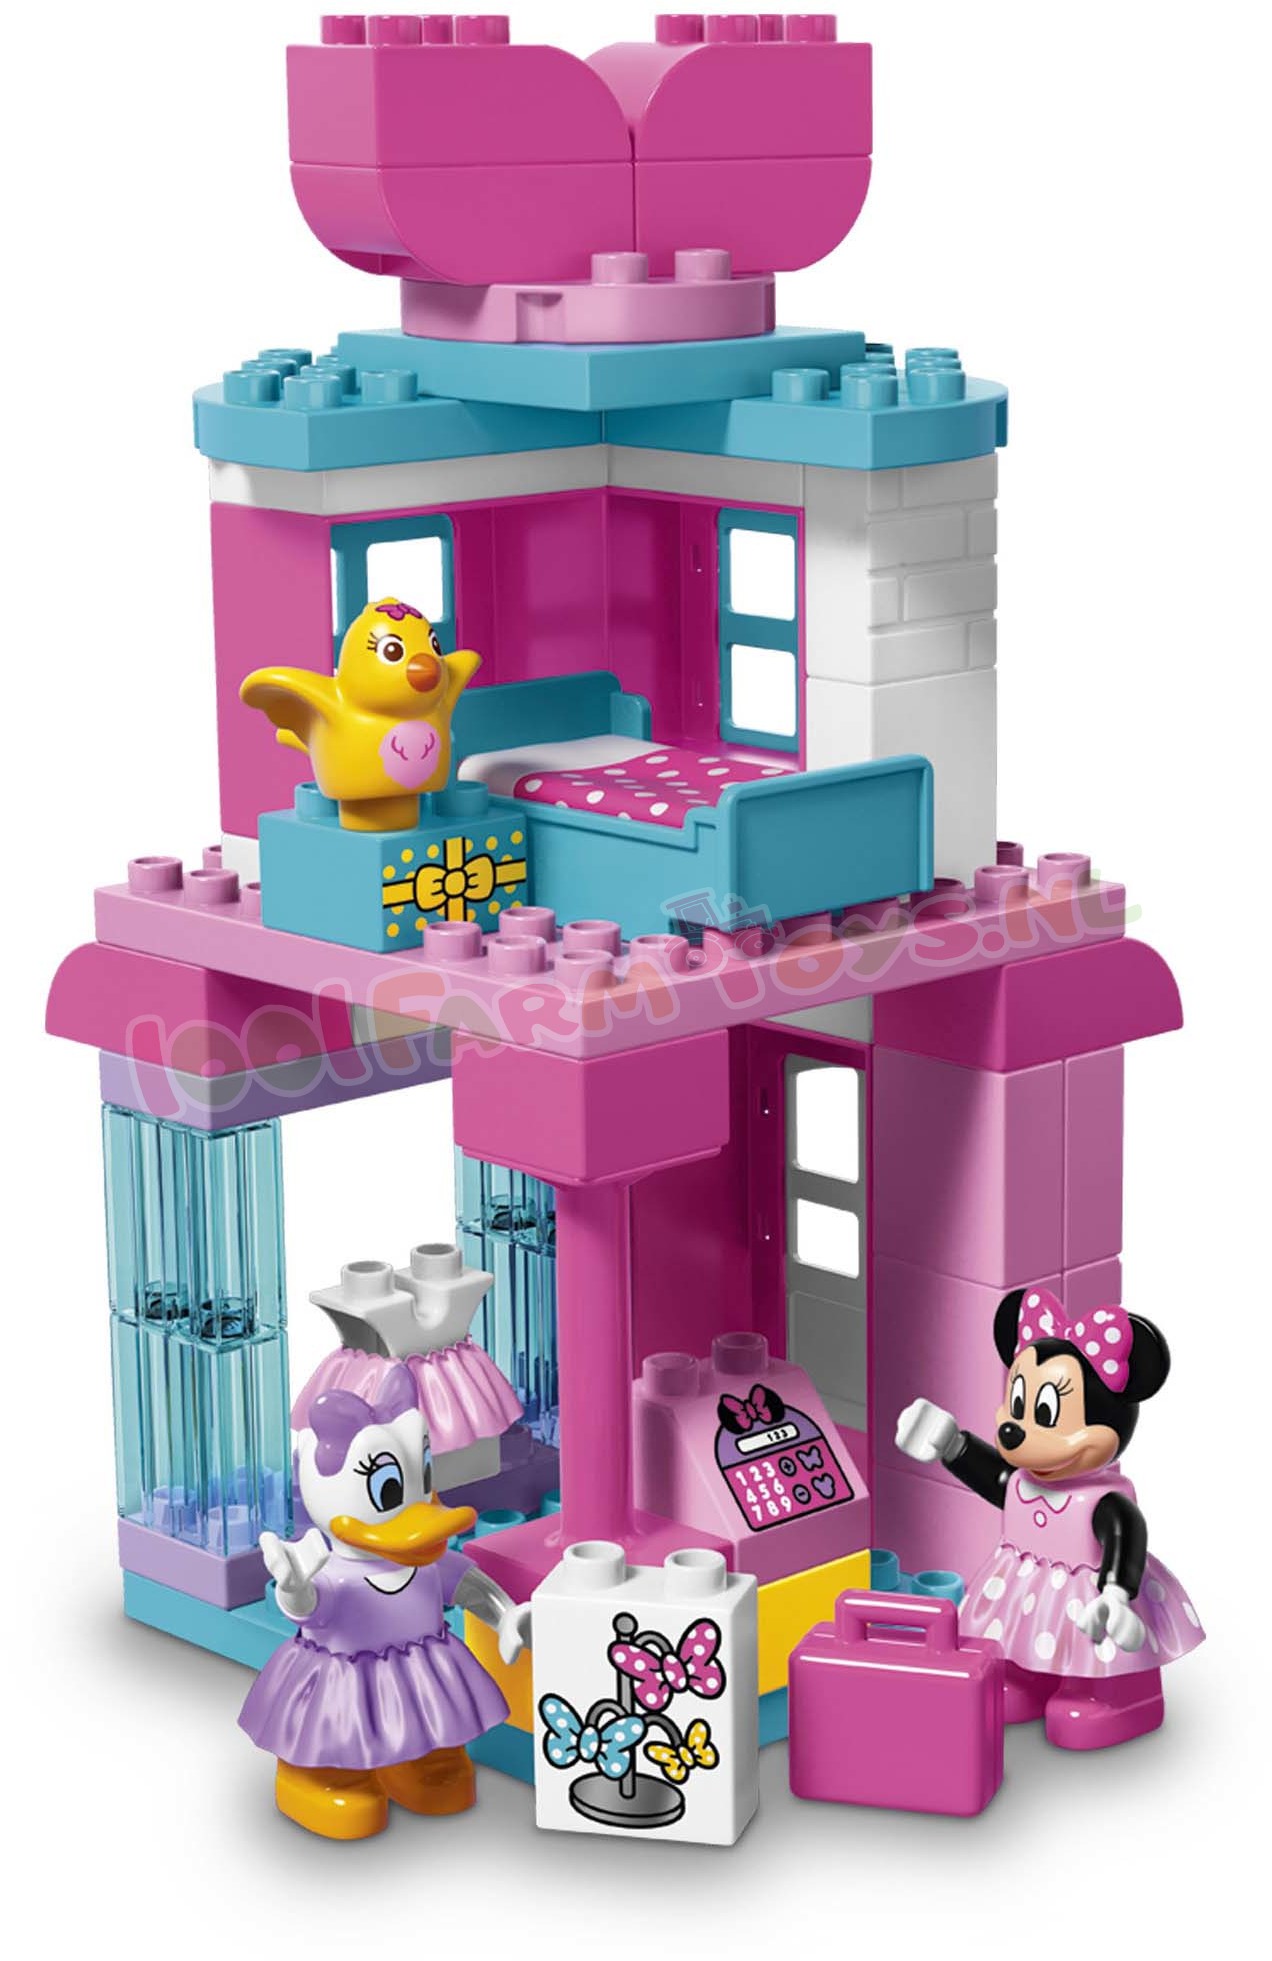 Ga trouwen komen Afleiden LEGO DUPLO MINNIE MOUSE BOW-TIQUE - 10844 - Uitverkocht Farm - 1001Farmtoys  landbouwspeelgoed - Kleine fans van Disneys Minnie Mouse zullen veel plezier